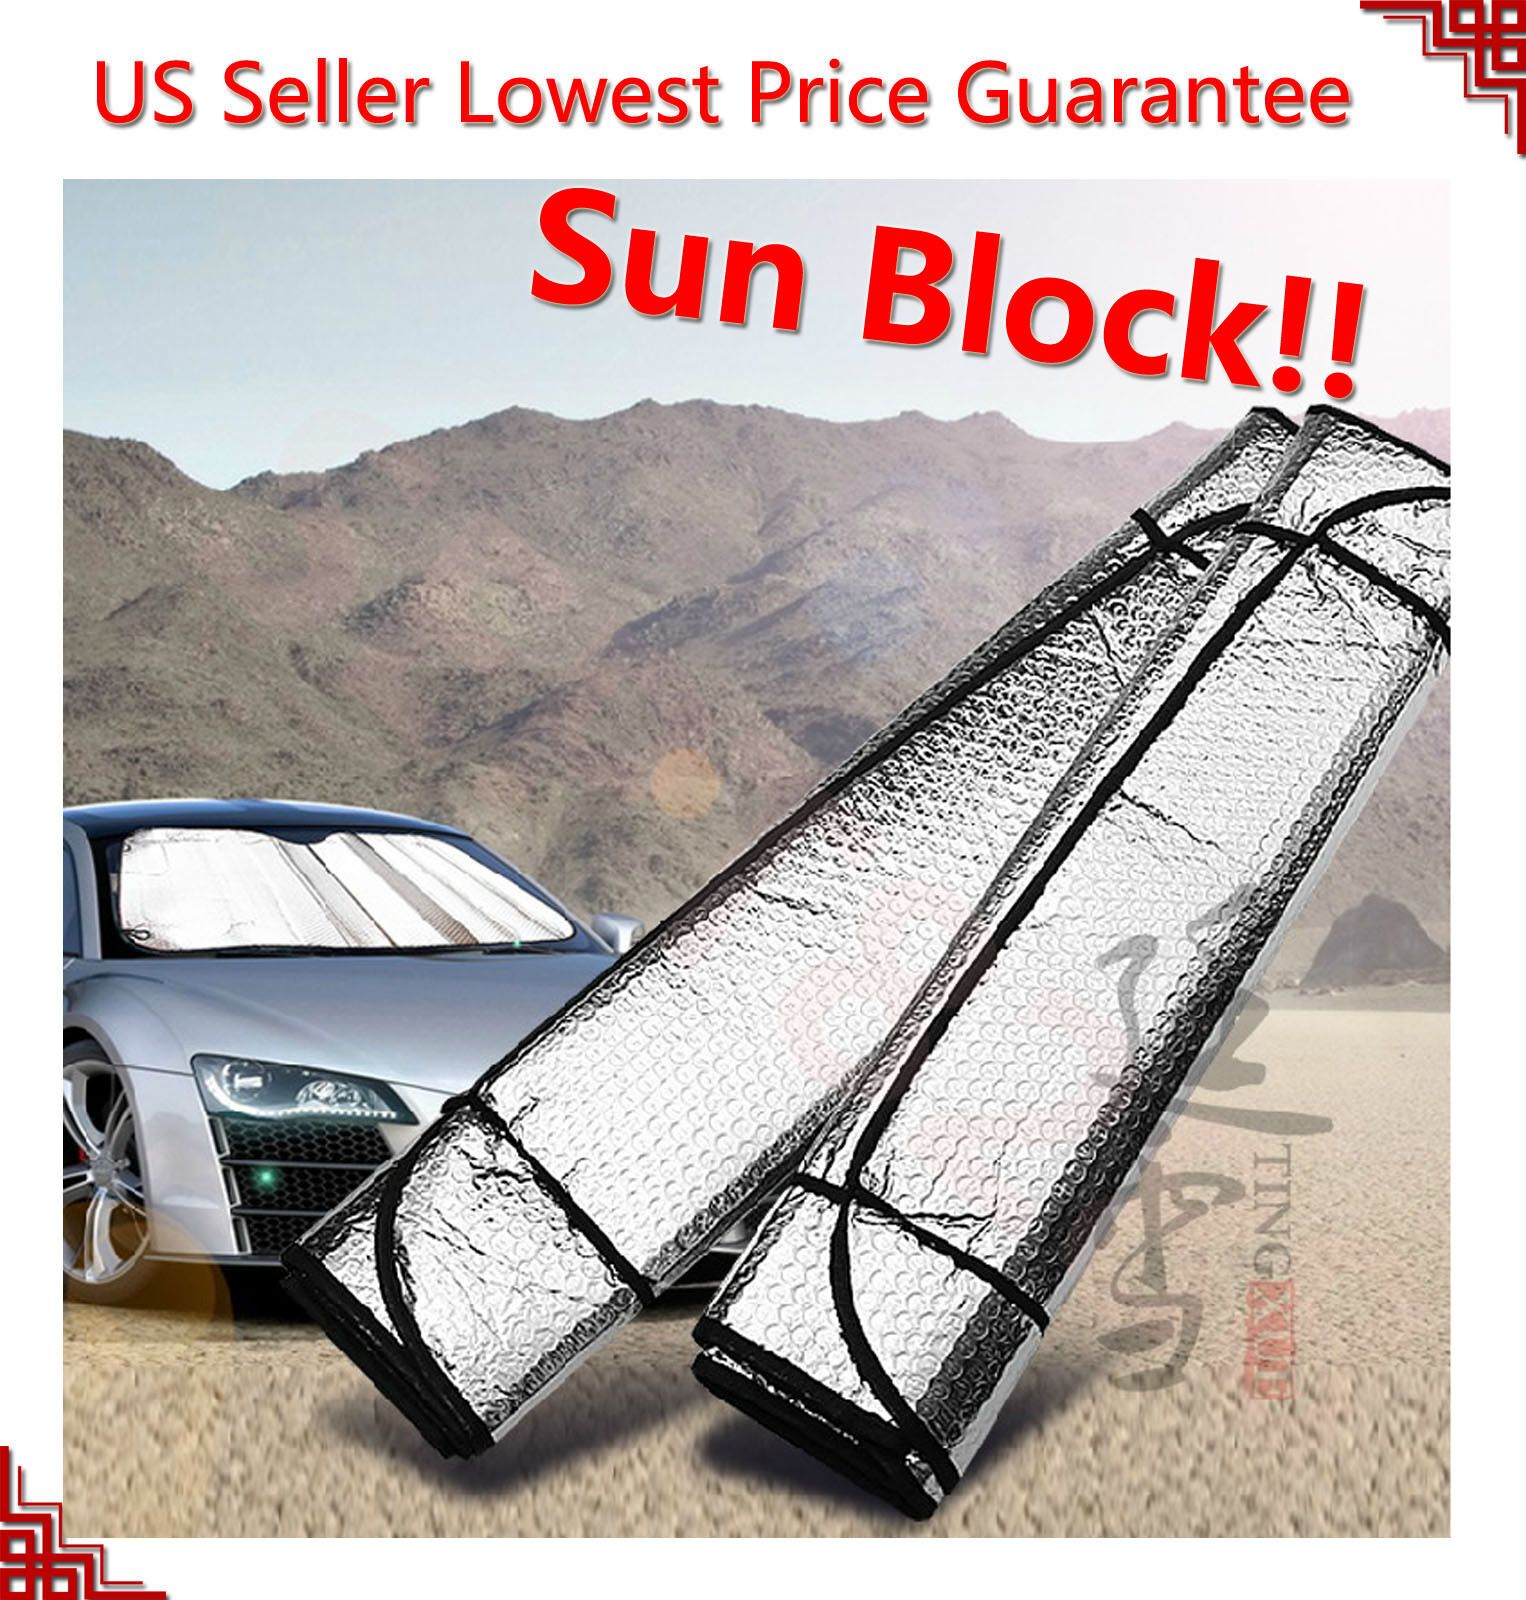 Auto Car Sun Shade Foldable Sun Visor For Front Wind Shield Windows Protect